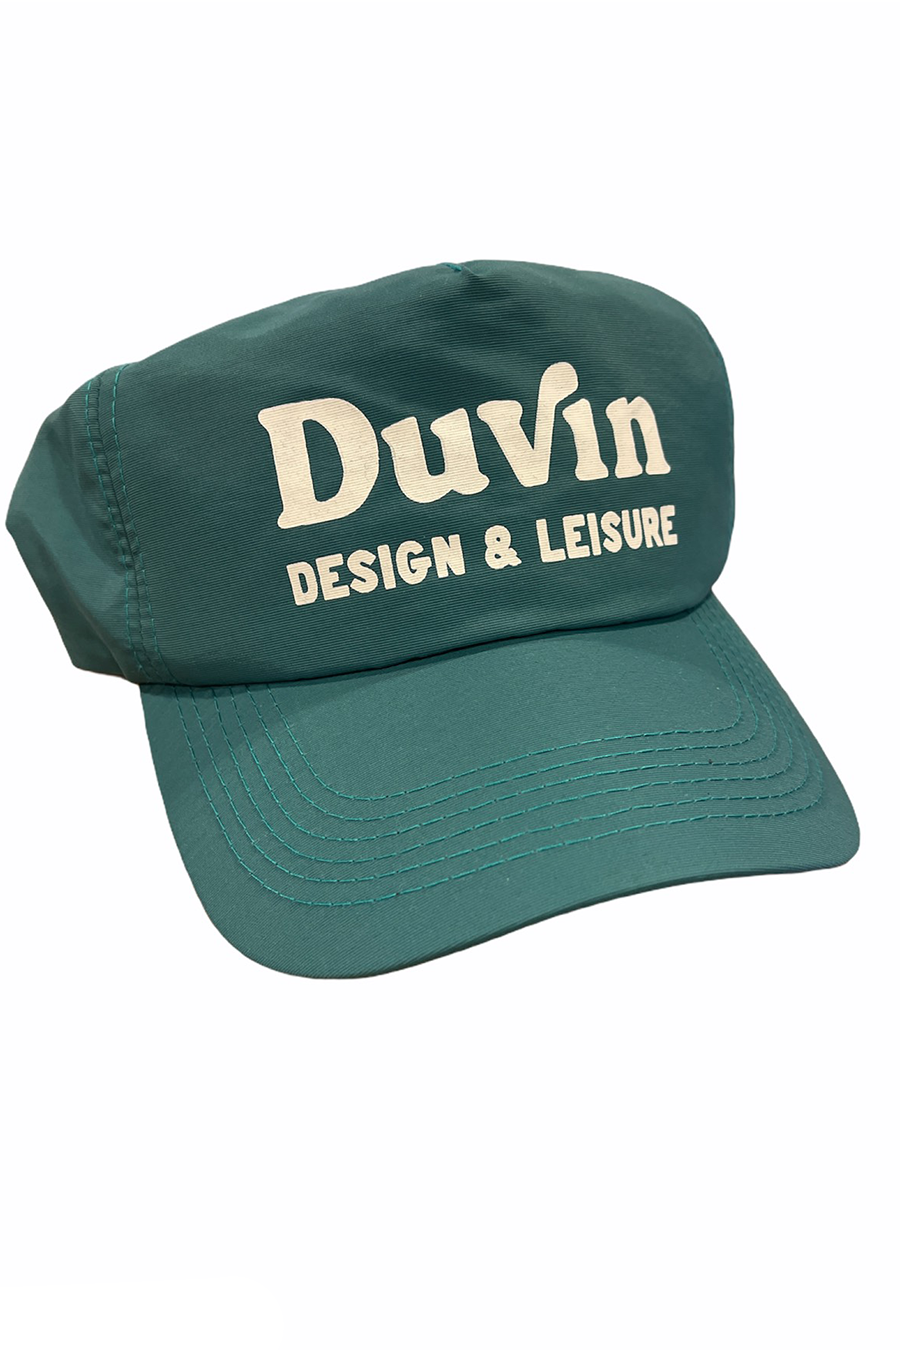 Logo Leisure Hat | Seafoam - Main Image Number 1 of 1